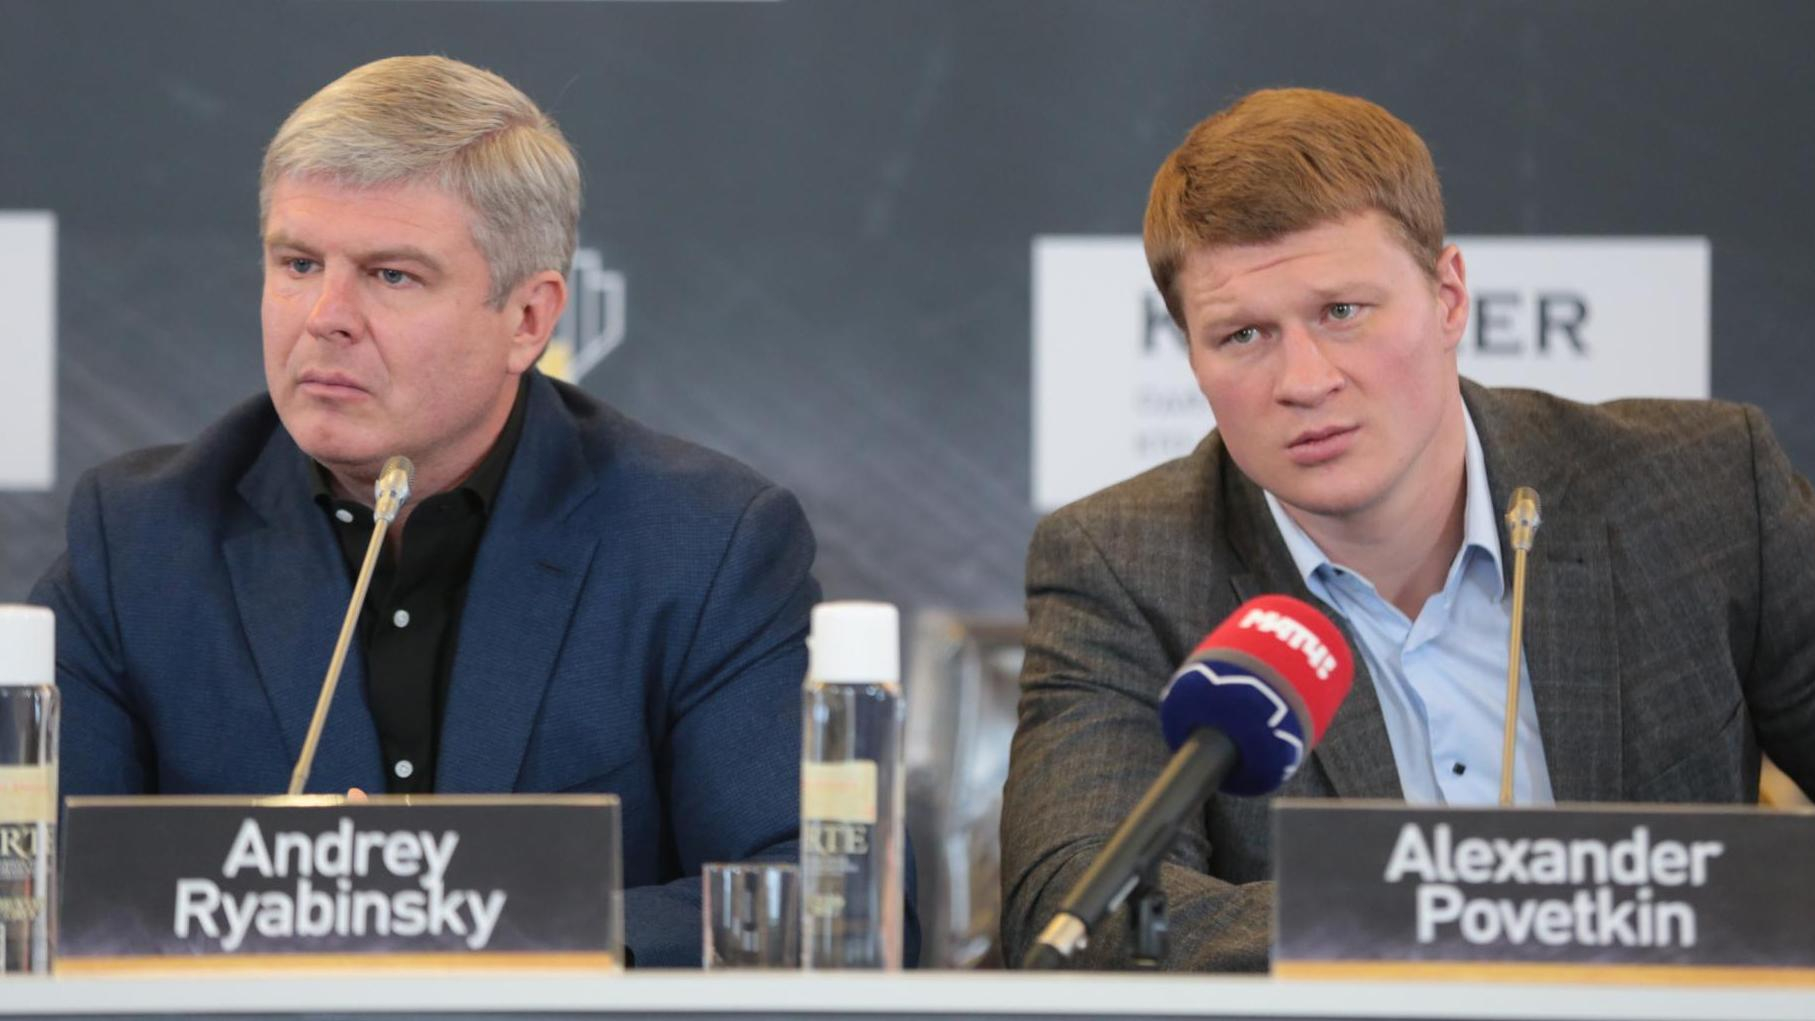 Andrey Ryabinsky and Alexander Povetkin